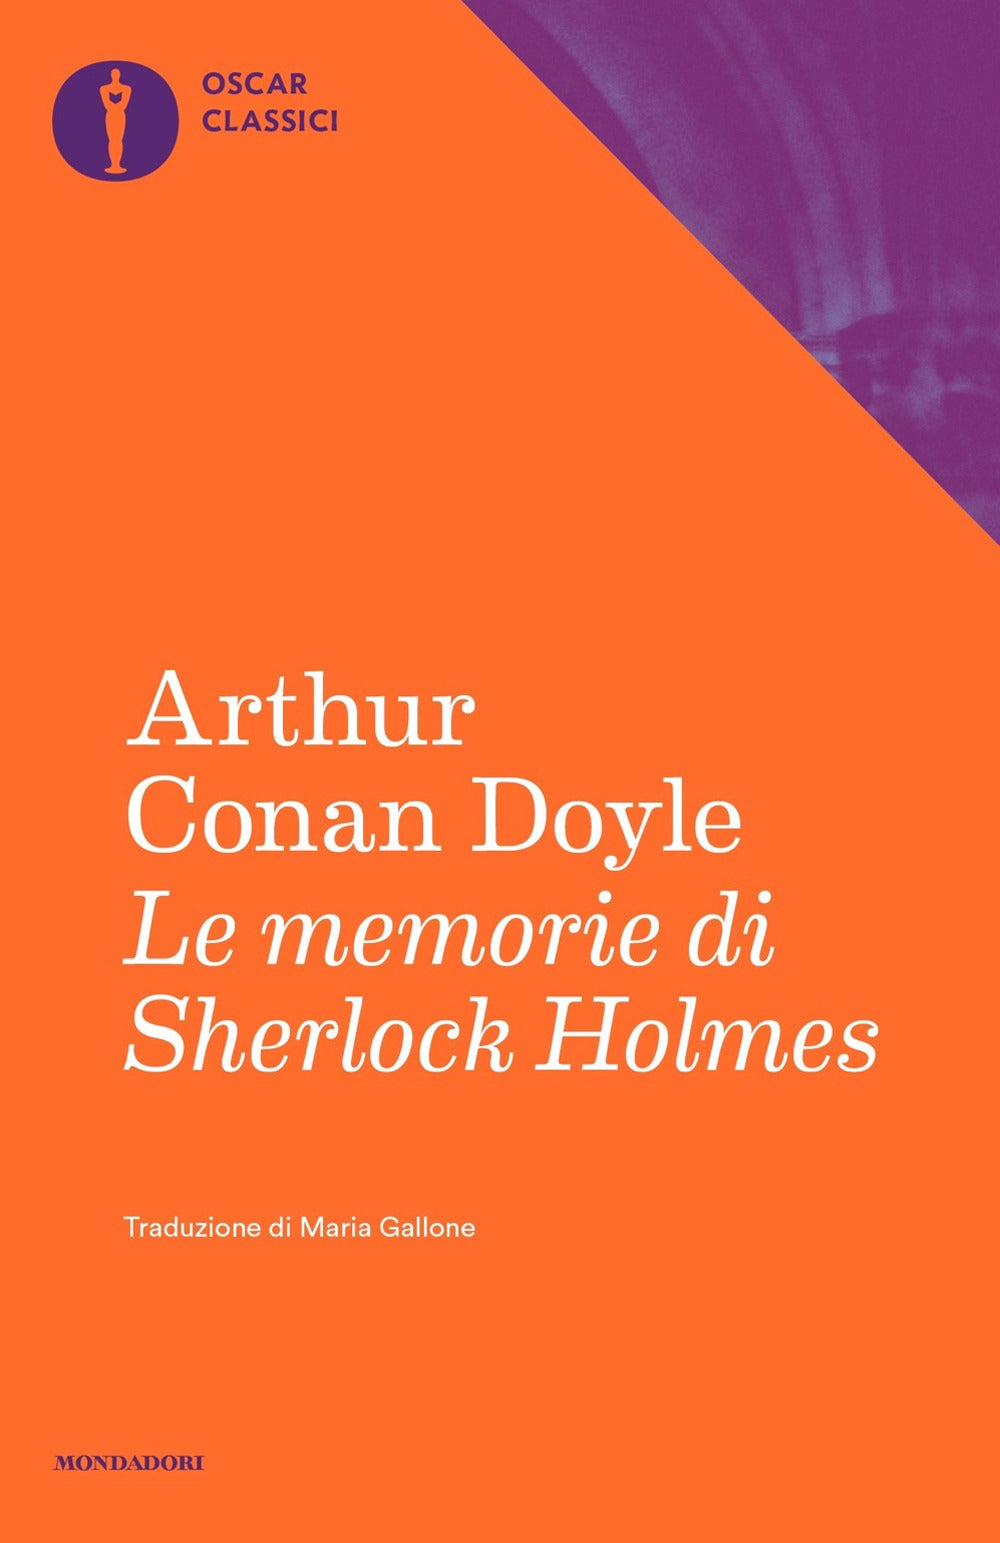 Le memorie di Sherlock Holmes.